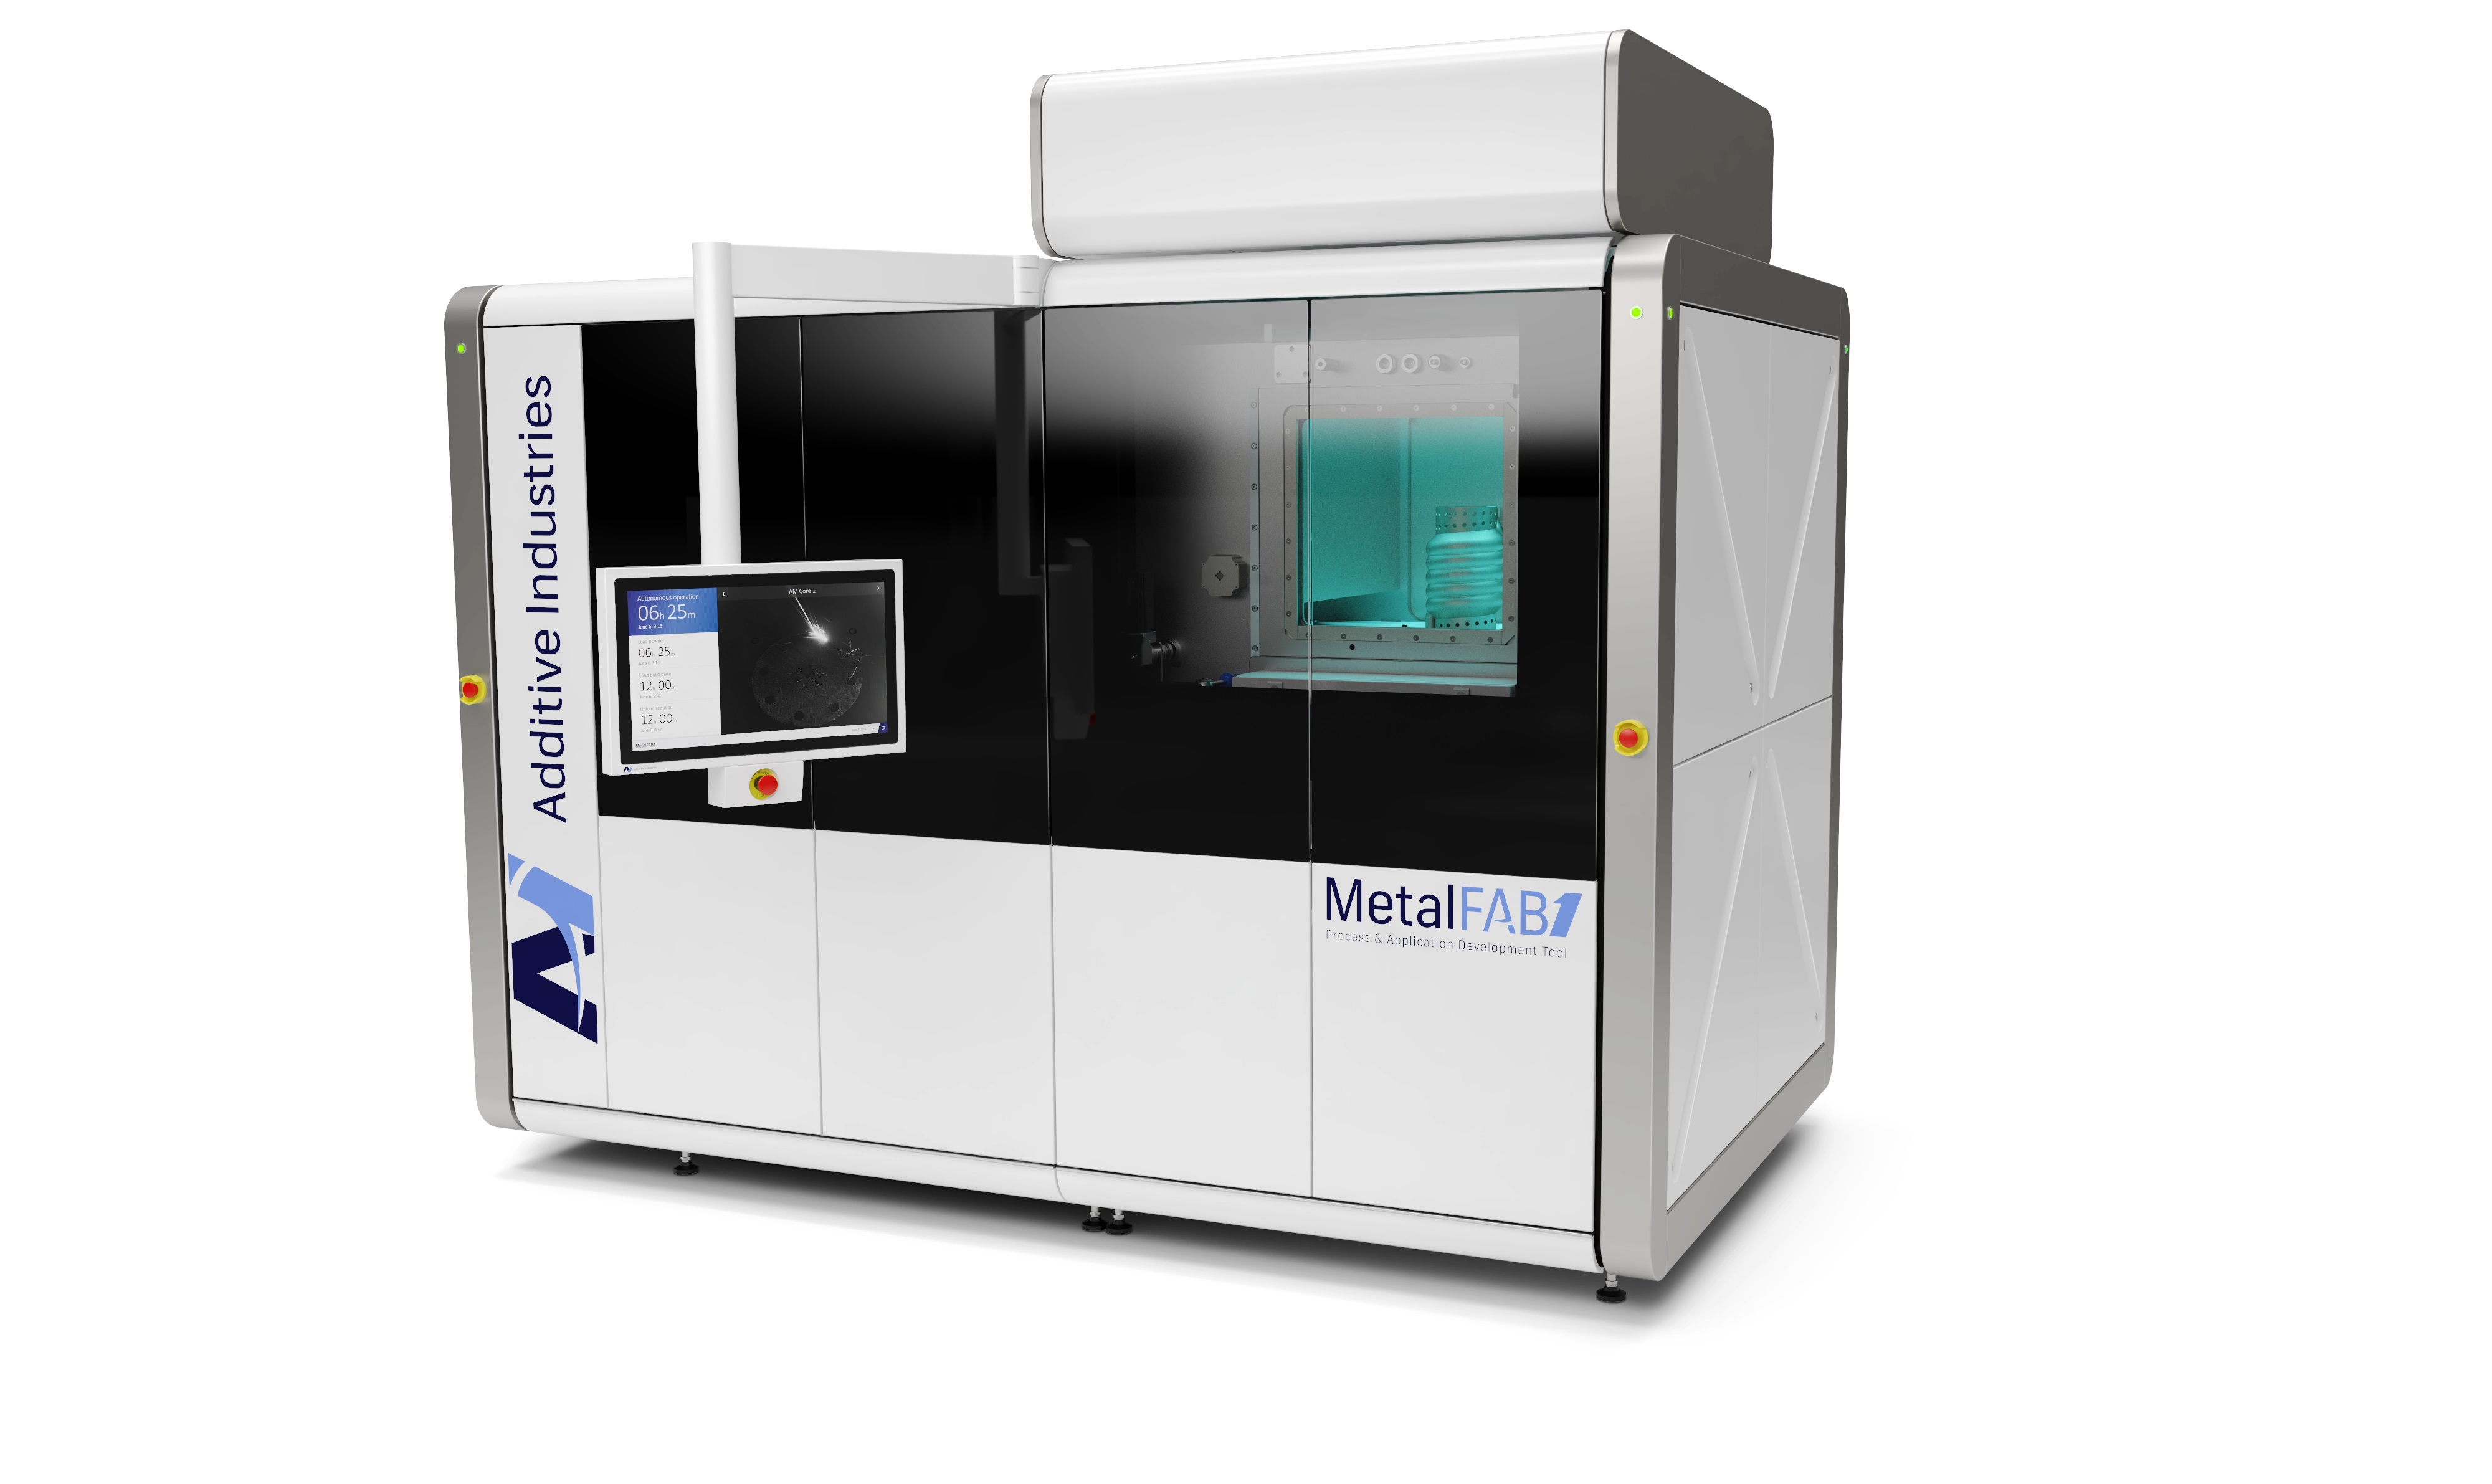 Additive Industries’ MetalFAB1 industrial 3D metal printing system.